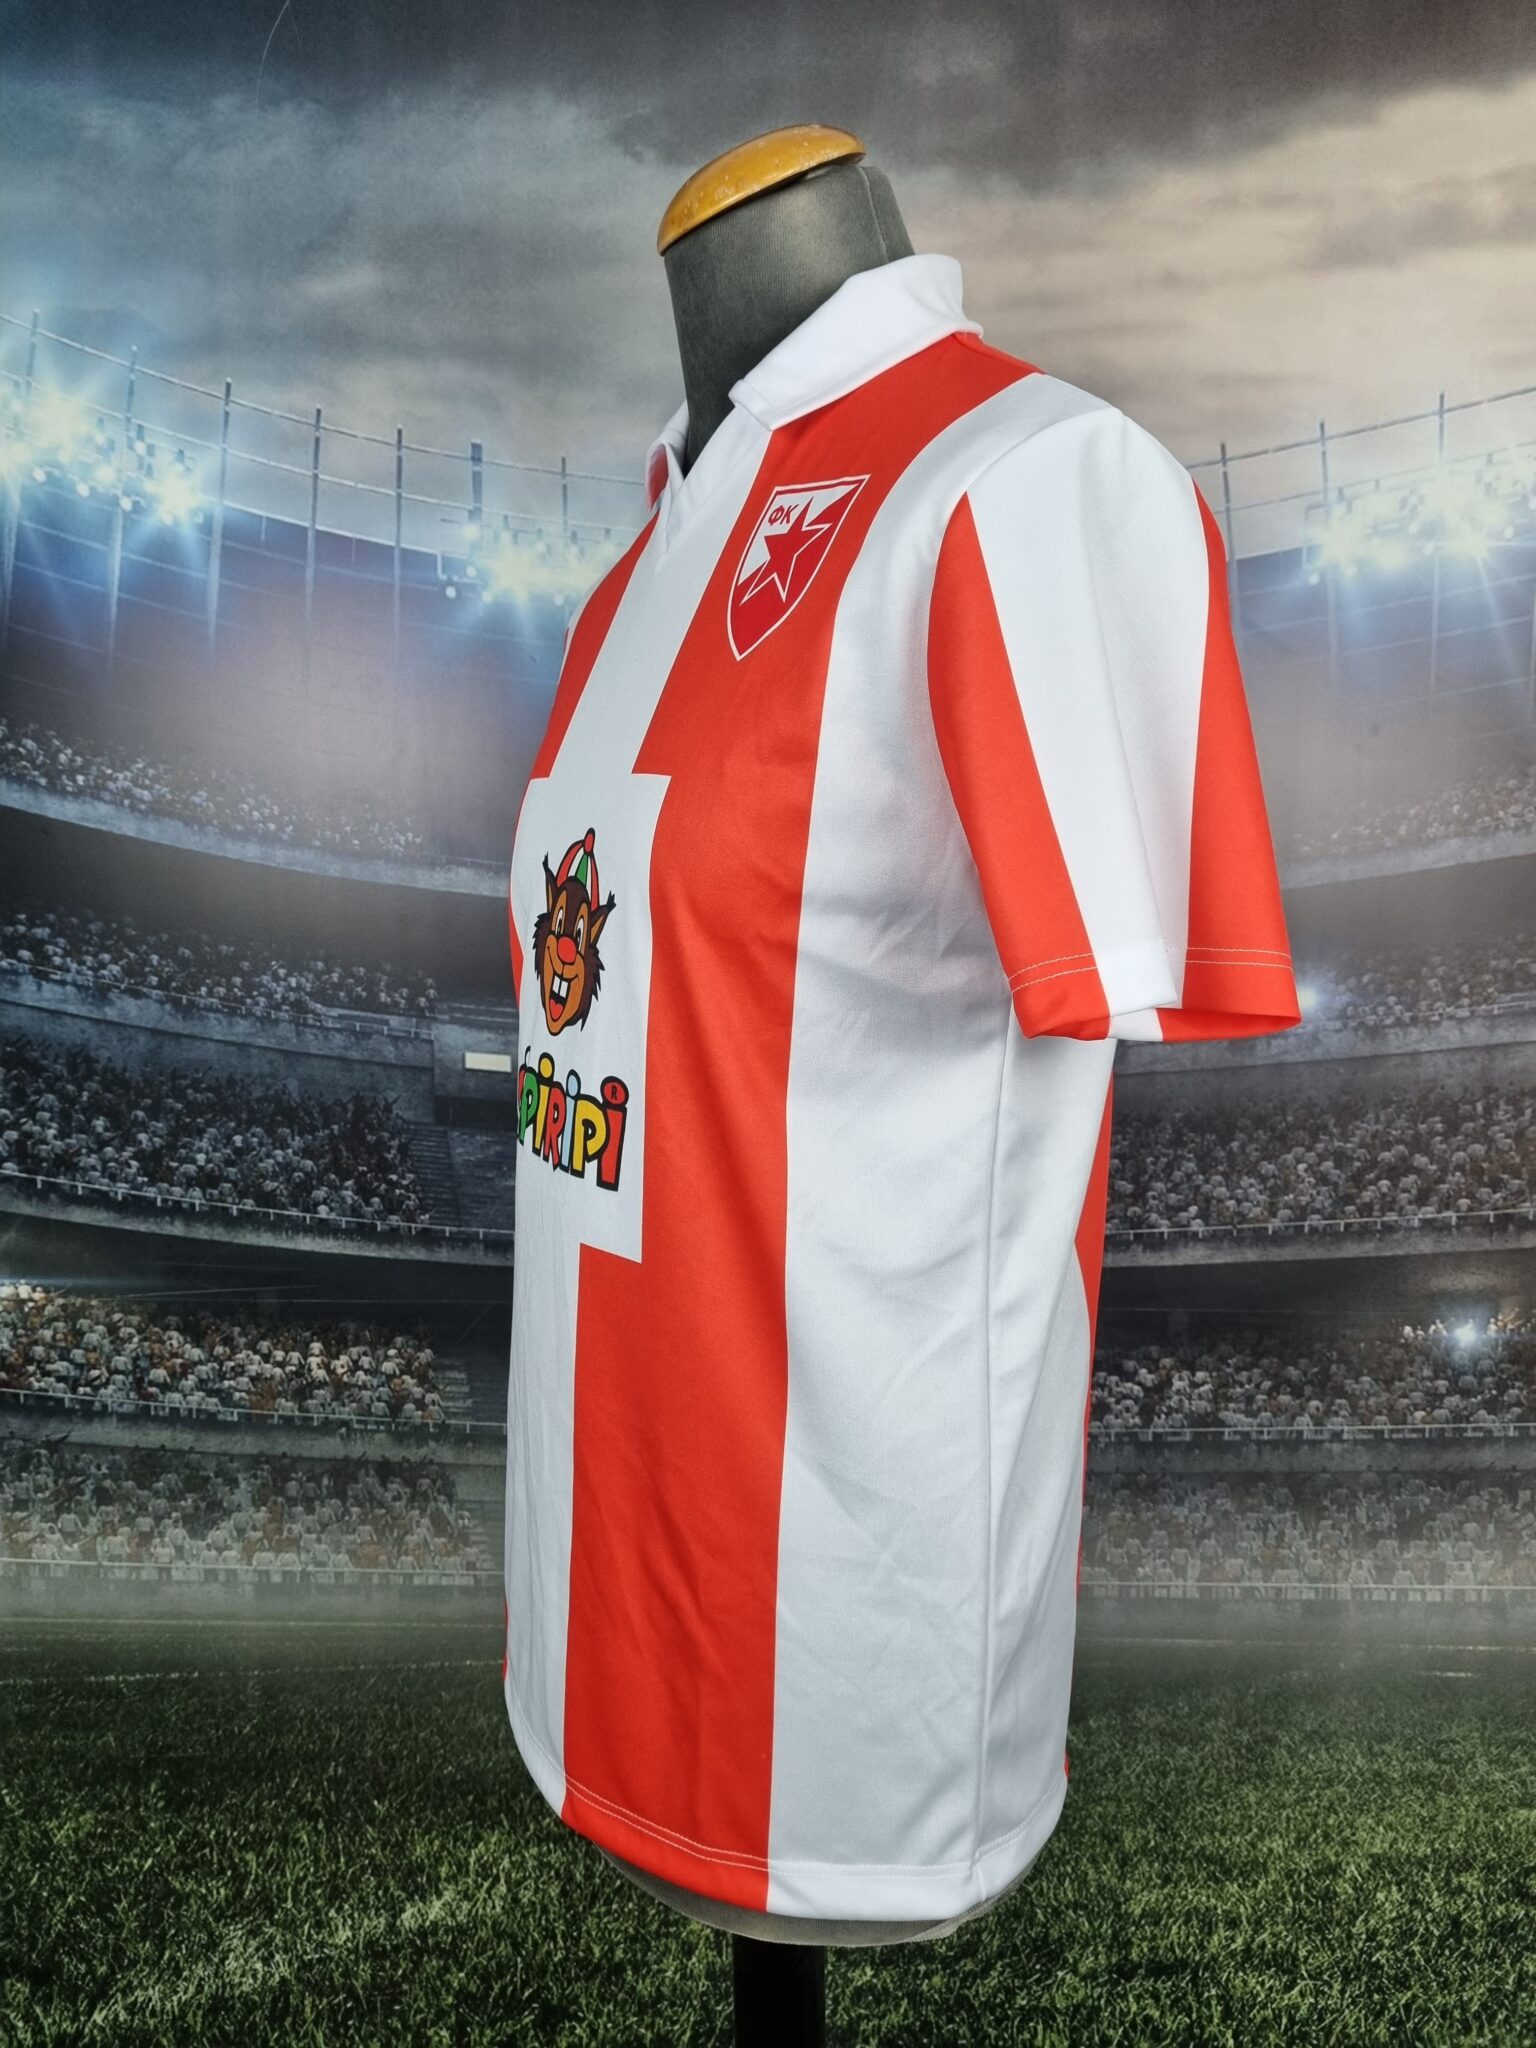 FK Crvena Zvezda Dres Football Jersey Cipiripi Red Star Belgrade Serbia Retro Shirt - Sport Club Memories